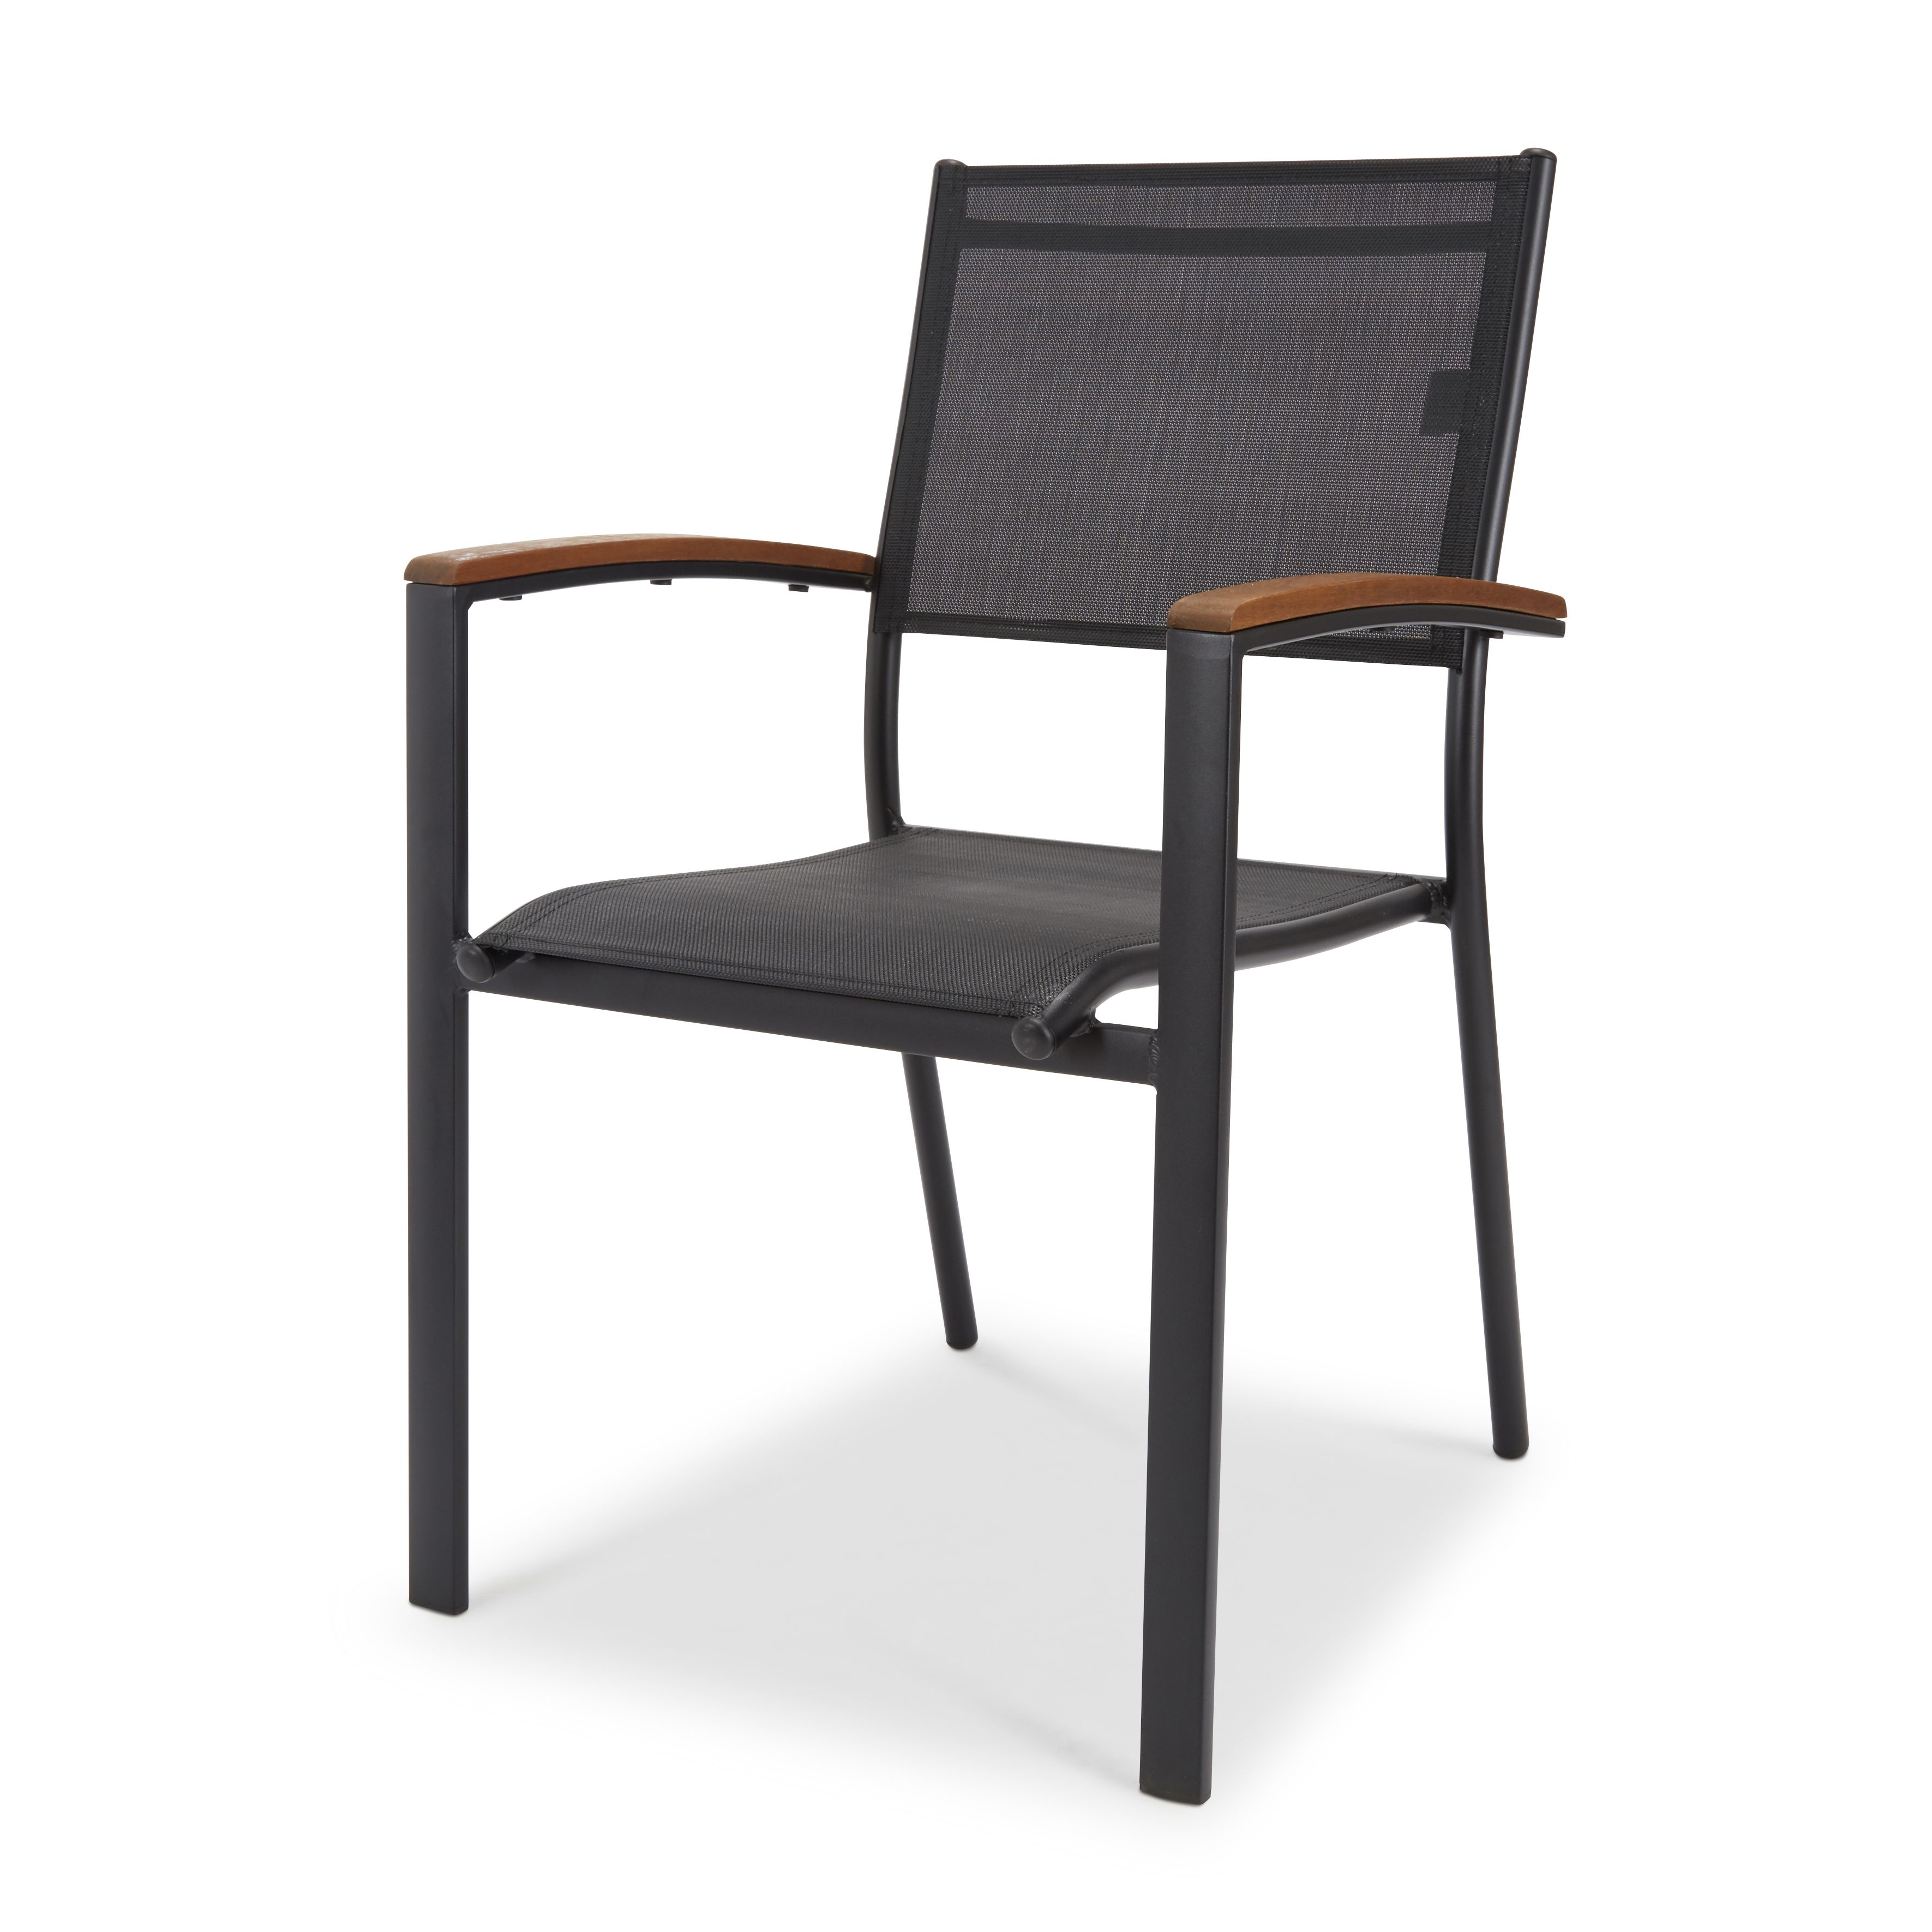 Toscana Black Chair | Departments | DIY at B&Q